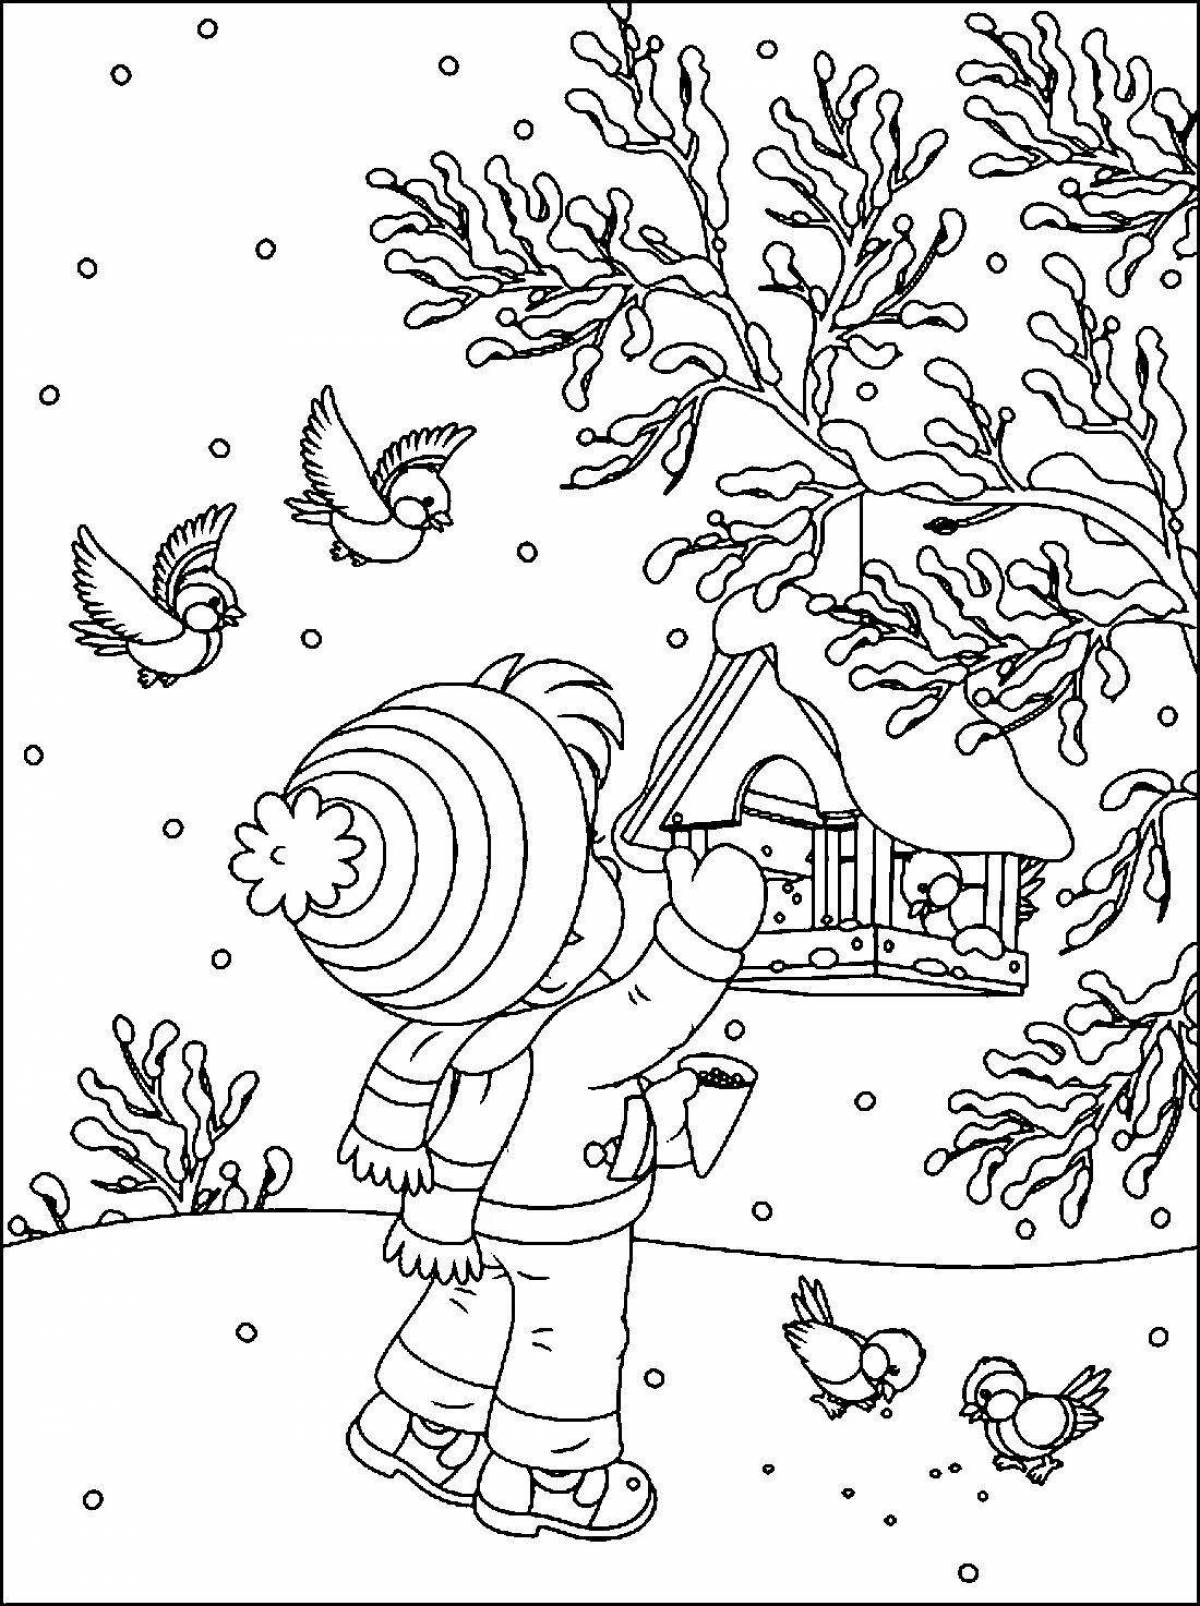 Children's bird feeder coloring book